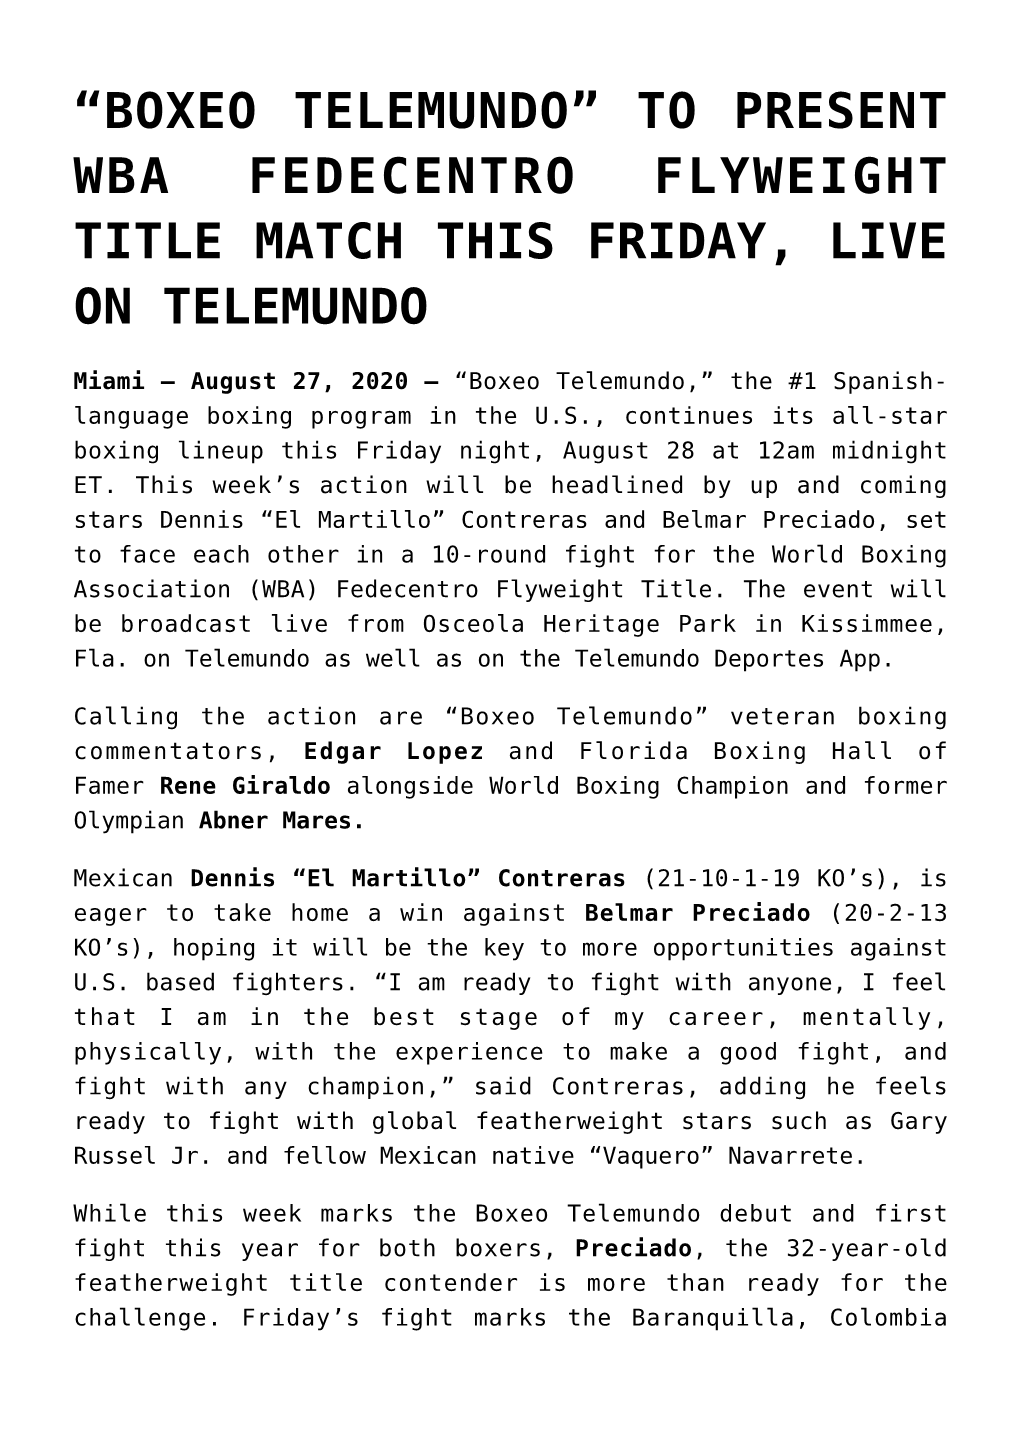 “Boxeo Telemundo” to Present Wba Fedecentro Flyweight Title Match This Friday, Live on Telemundo